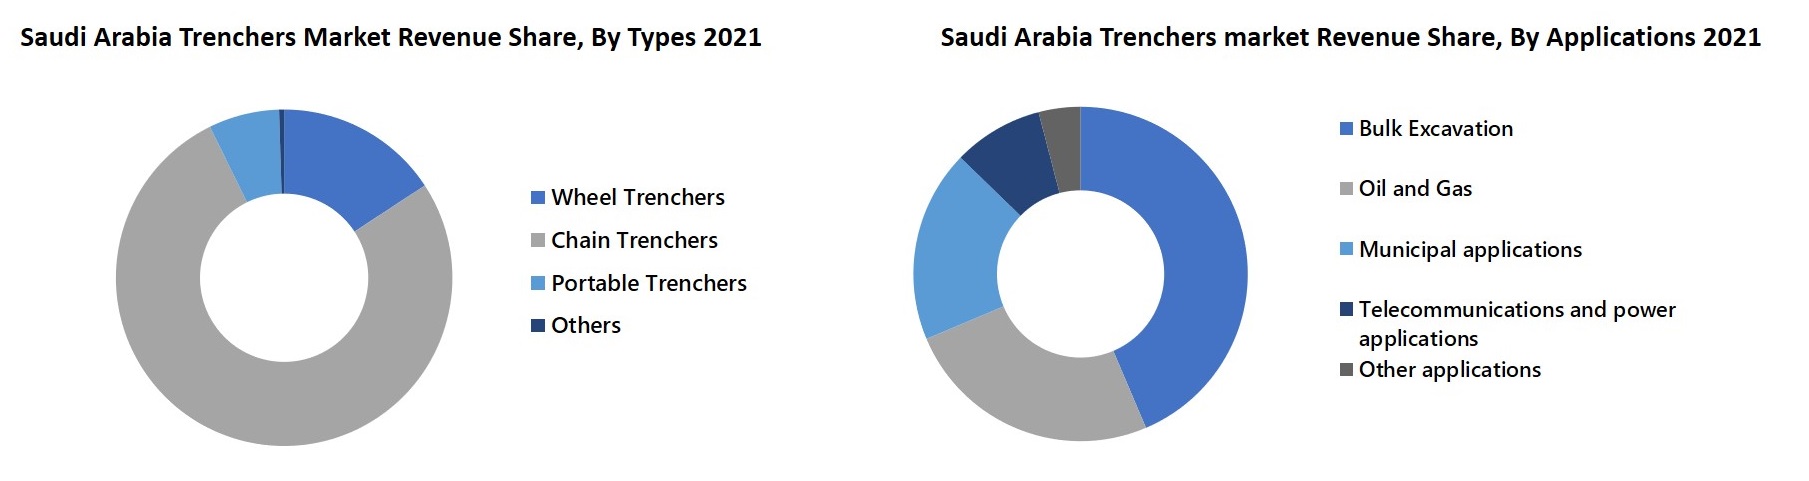 Saudi Arabia Trenchers Market Revenue Share